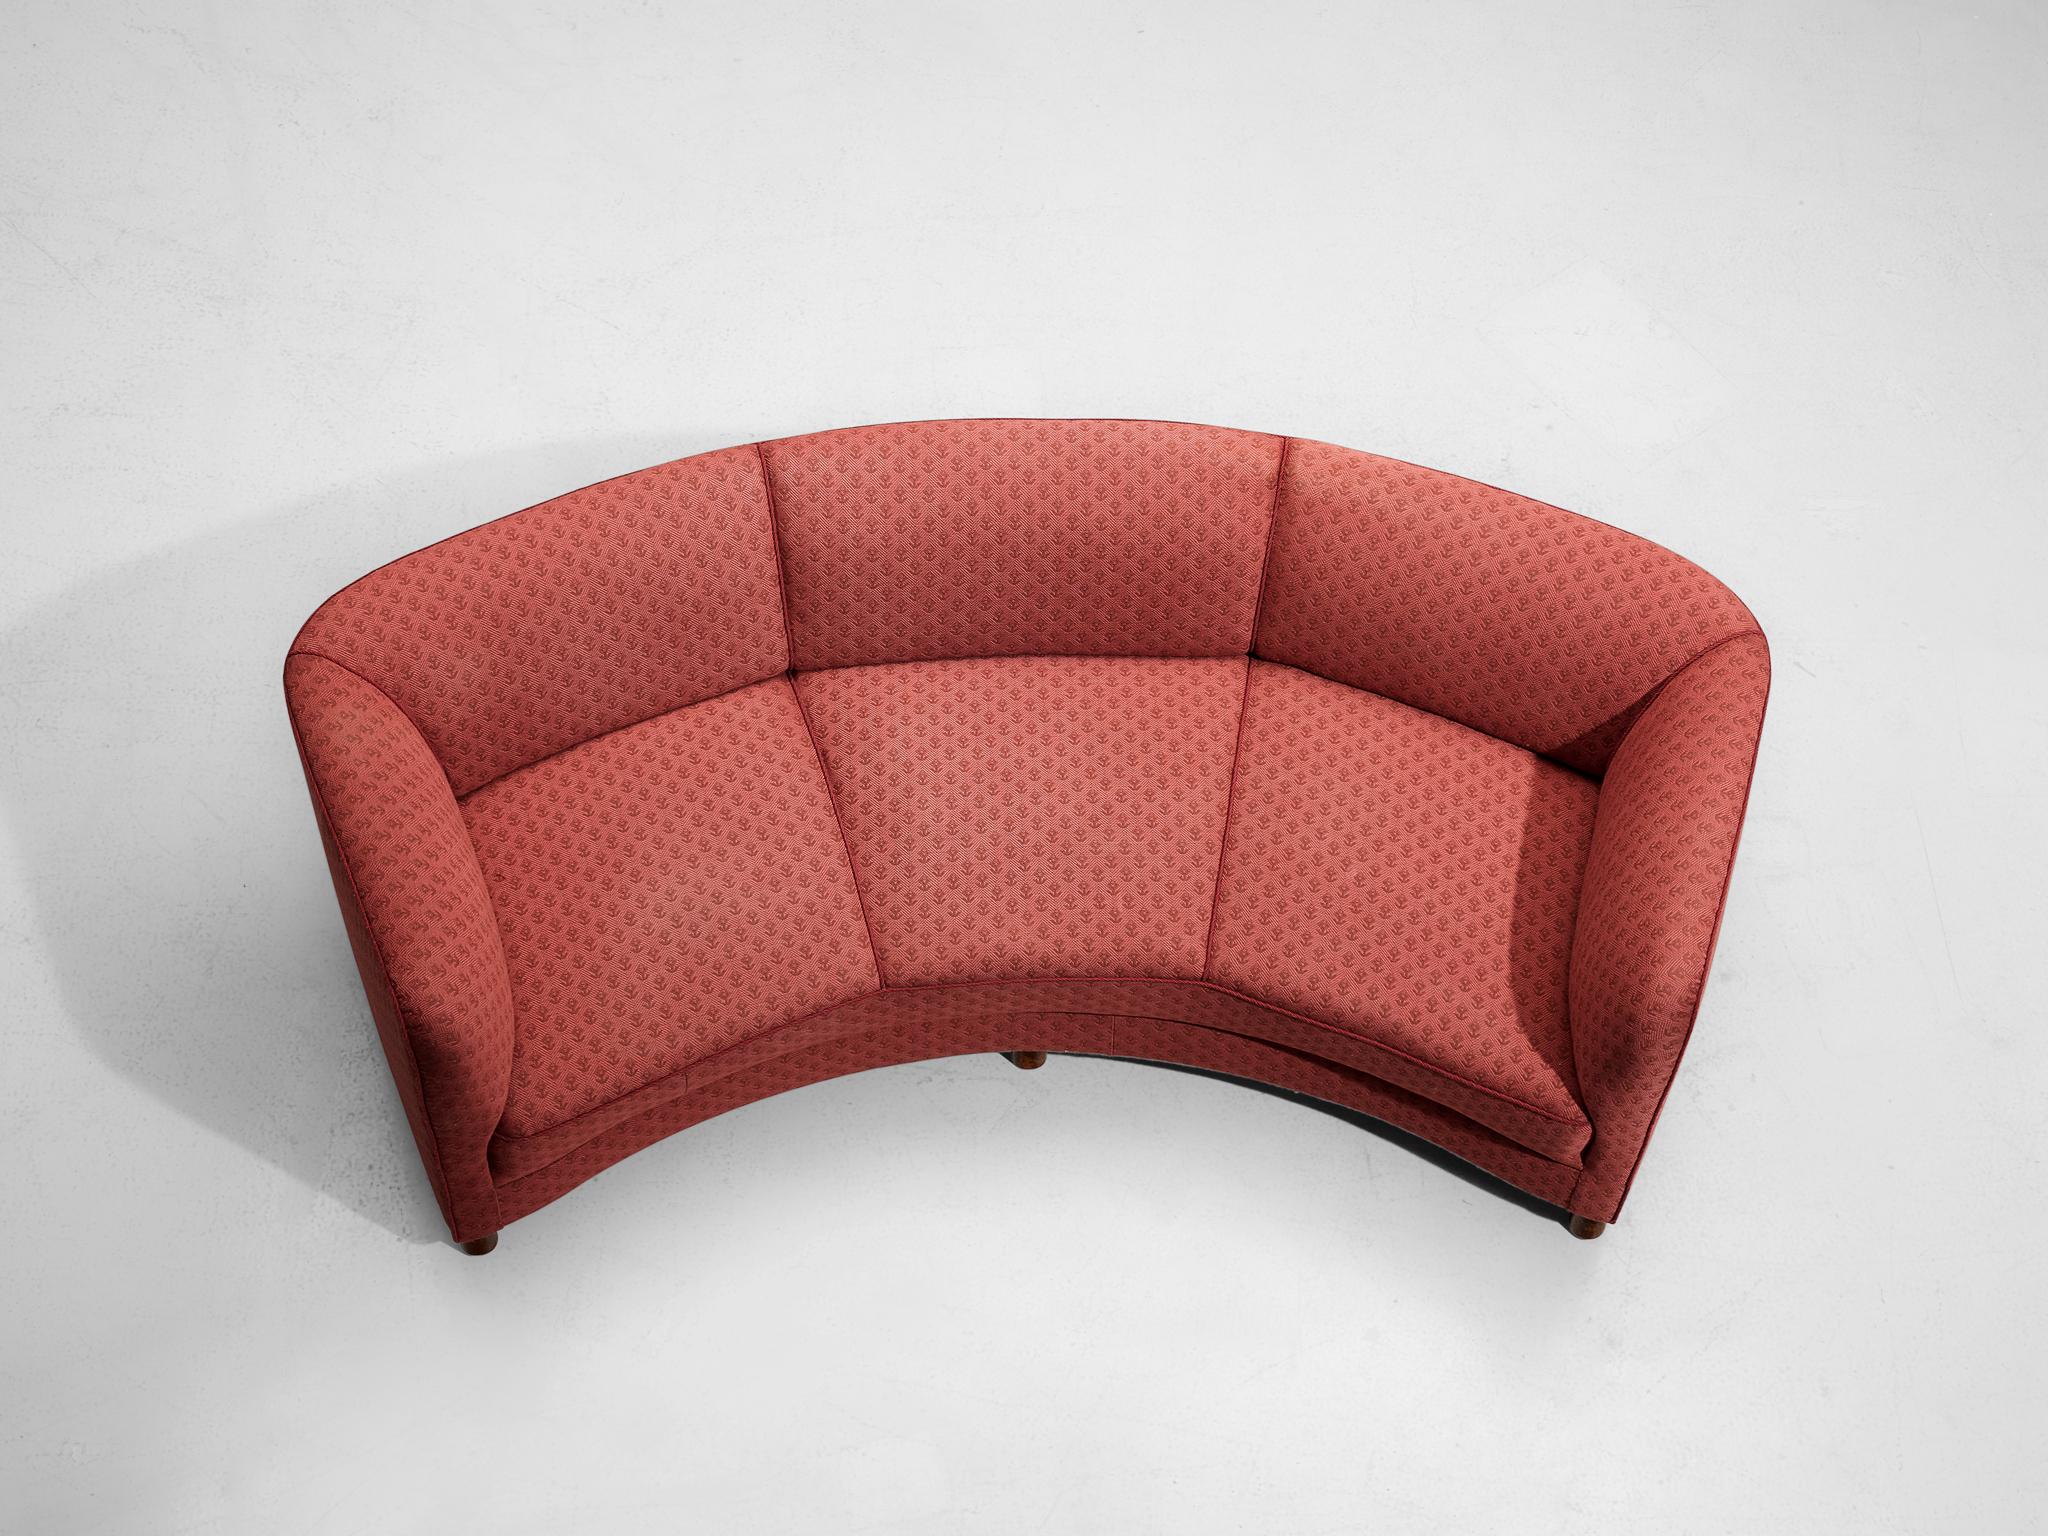 Dänisches geschwungenes Sofa mit geblümter roter Polsterung (Skandinavische Moderne) im Angebot